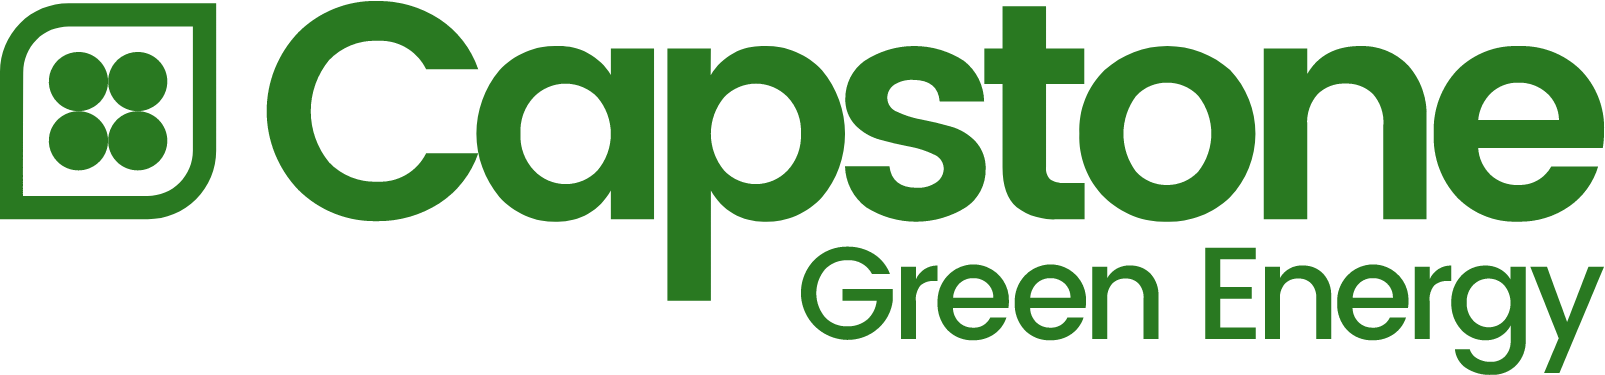 Capstone Green Energy logo large (transparent PNG)